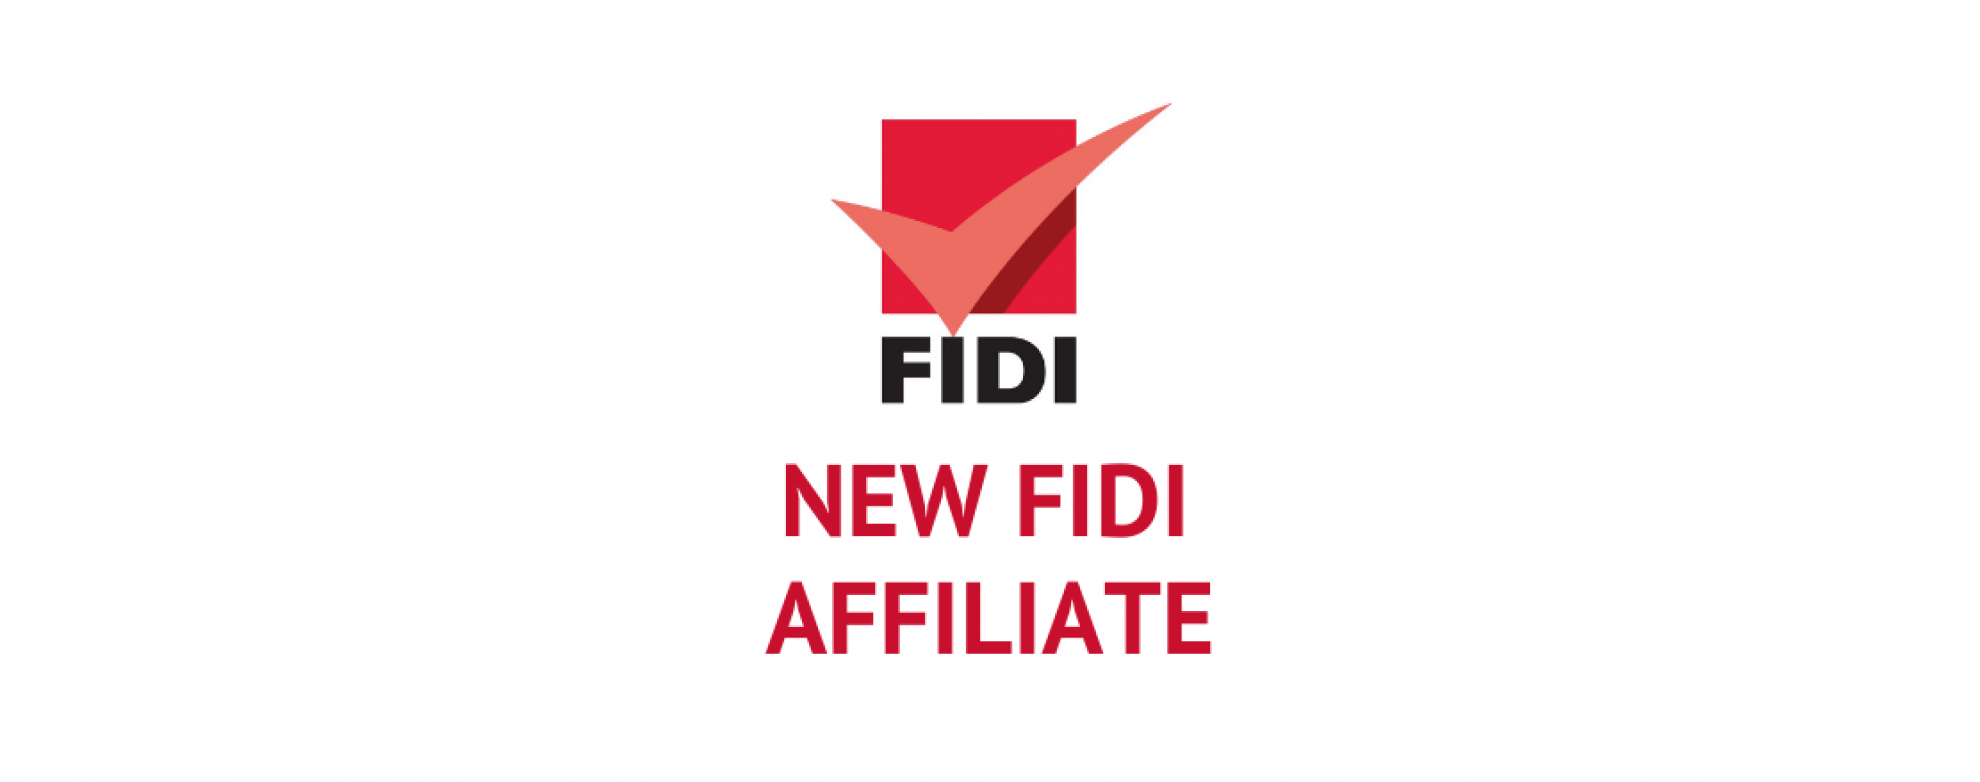 New FIDI Affiliate - Windmill Forwarding BV, Den Haag, the Netherlands